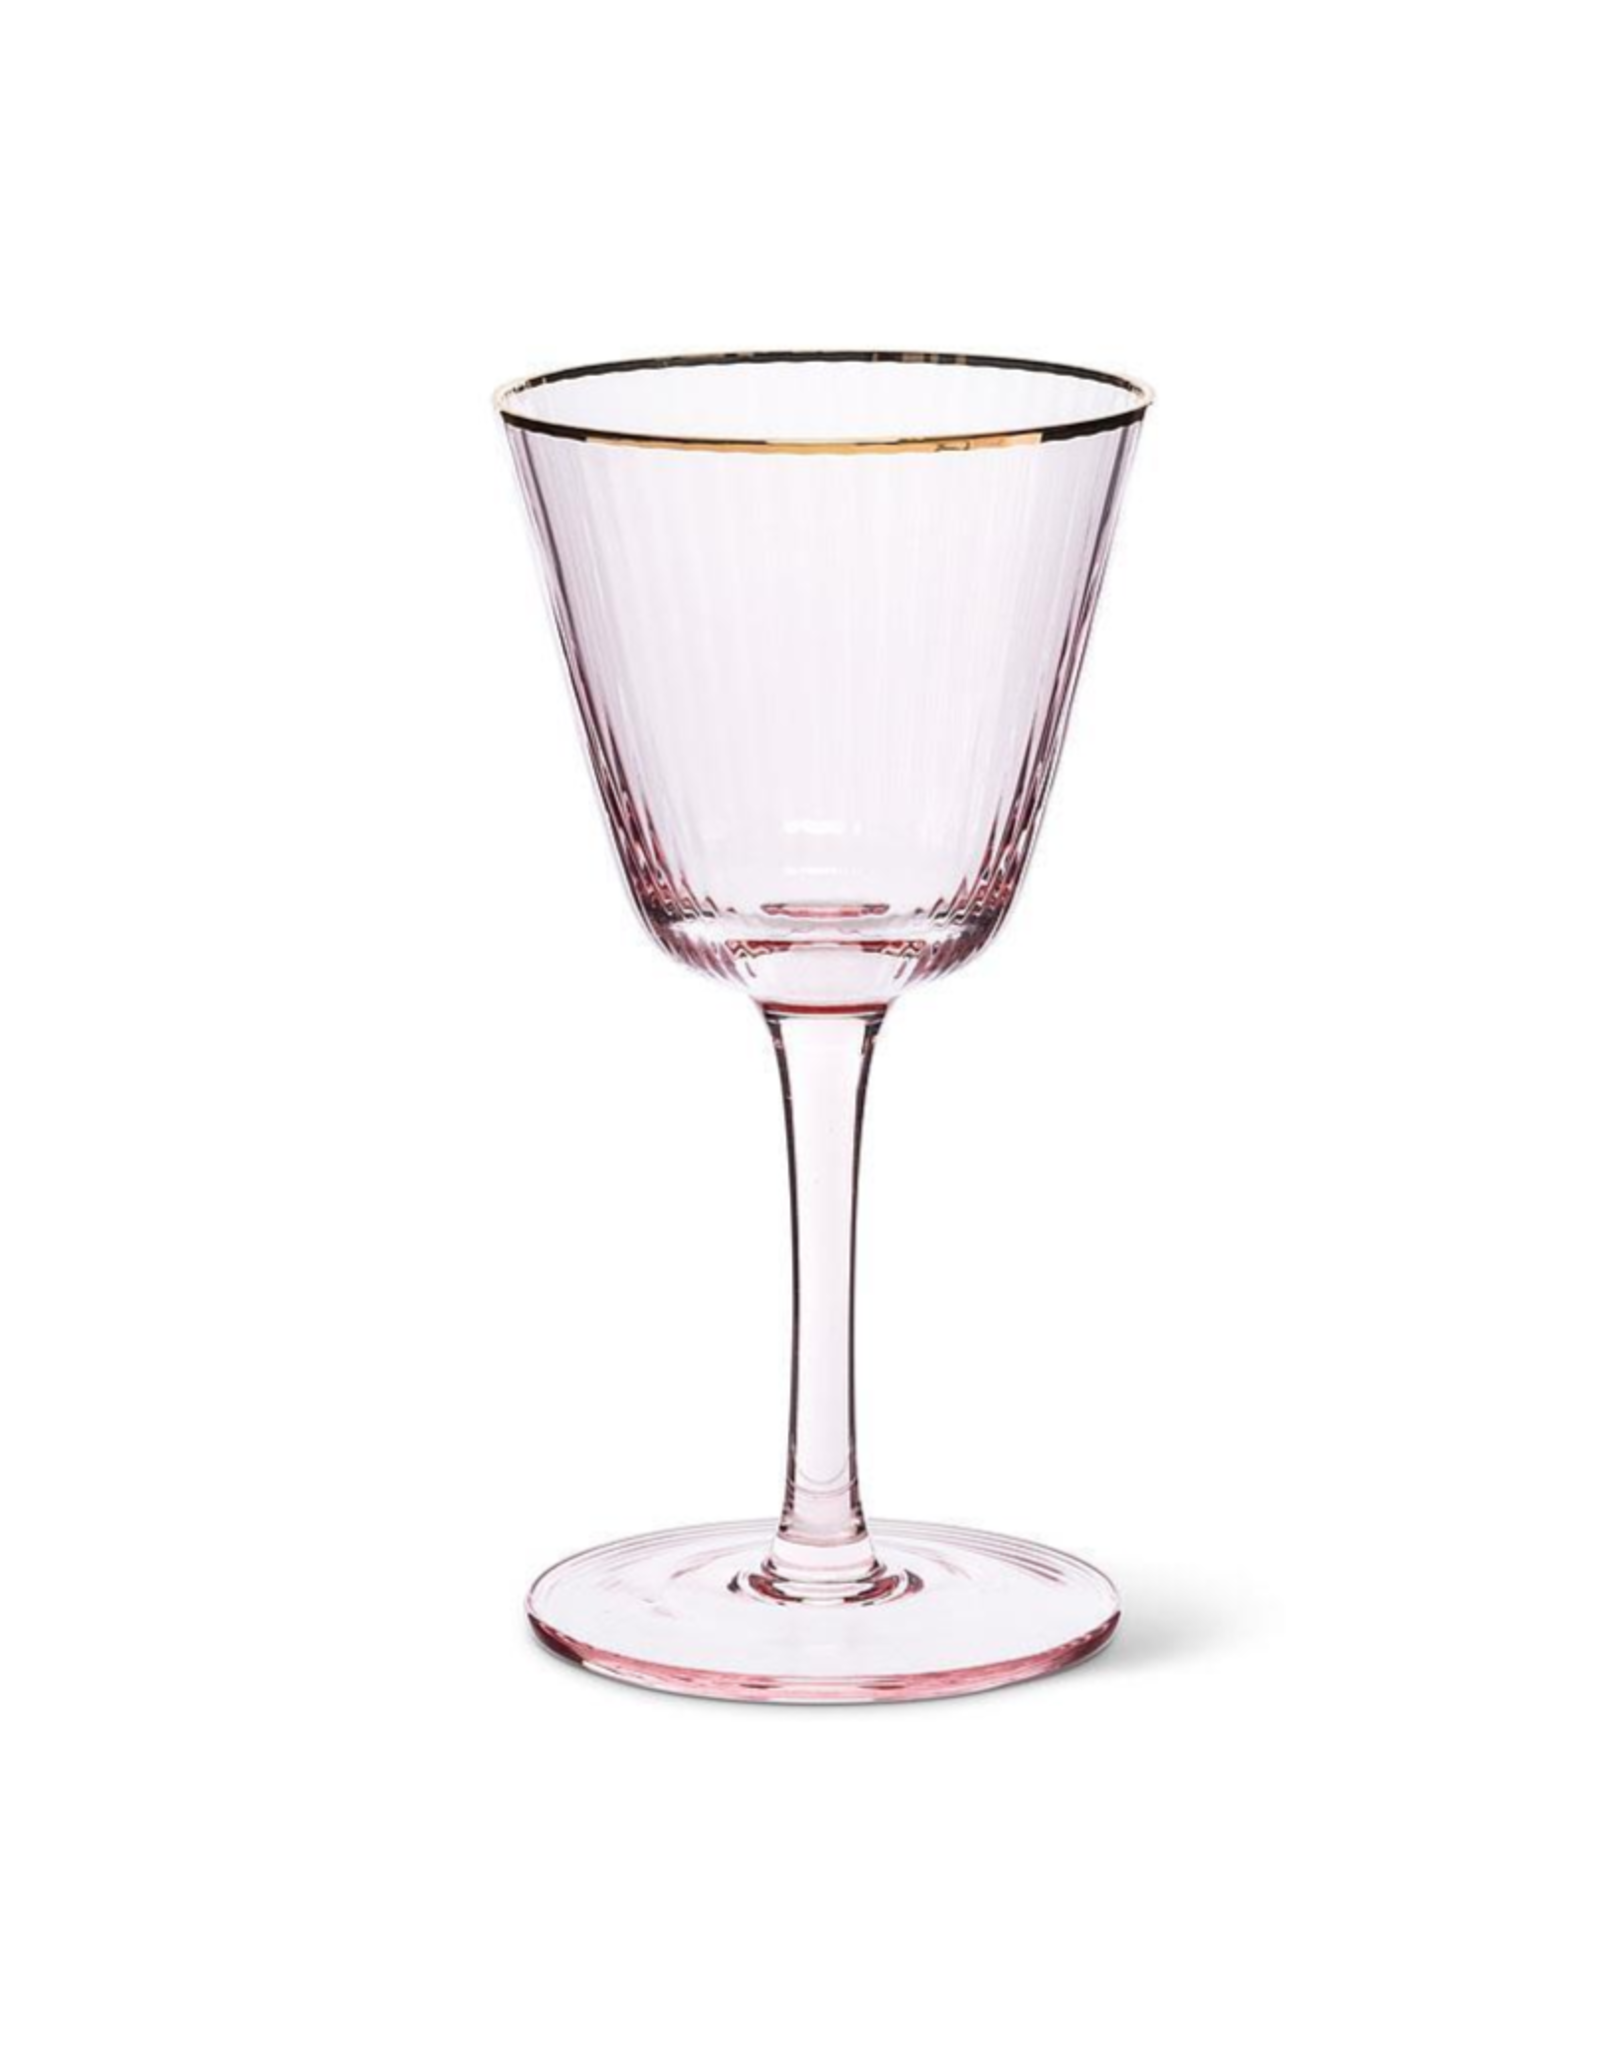 ATT - Cocktail Glass / Rose with Gold Rim, 6oz